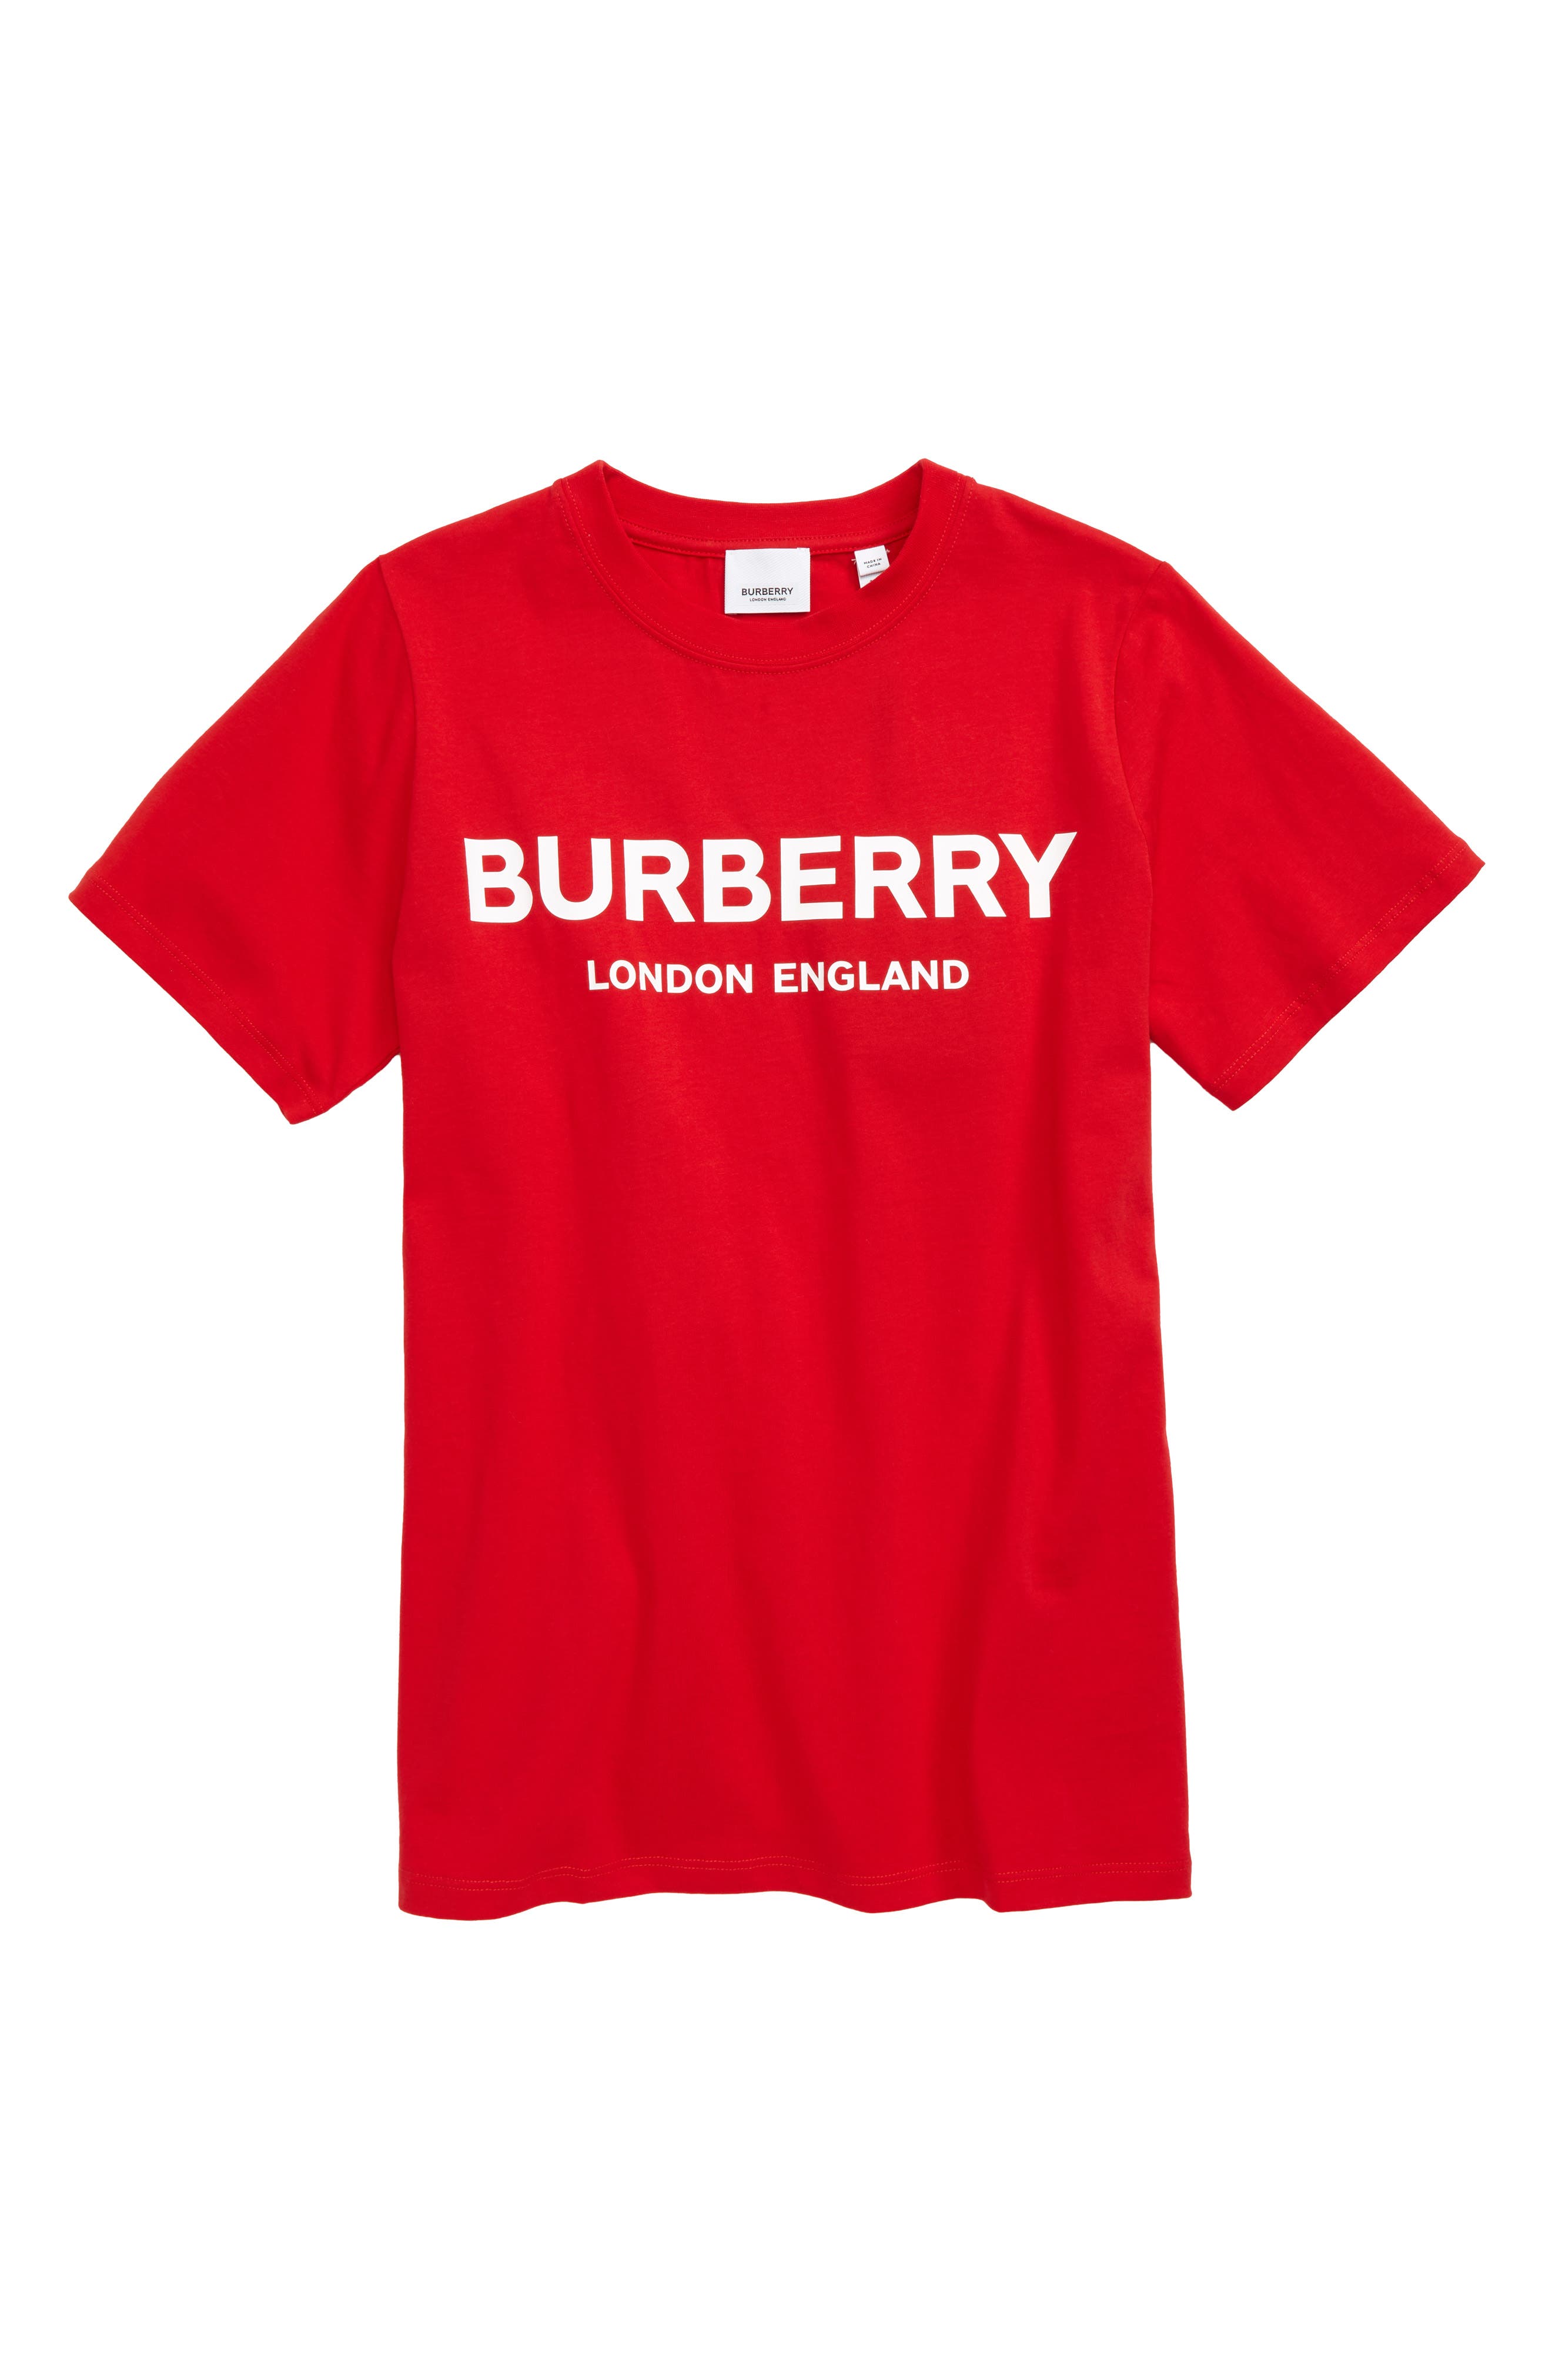 burberry robbie t shirt